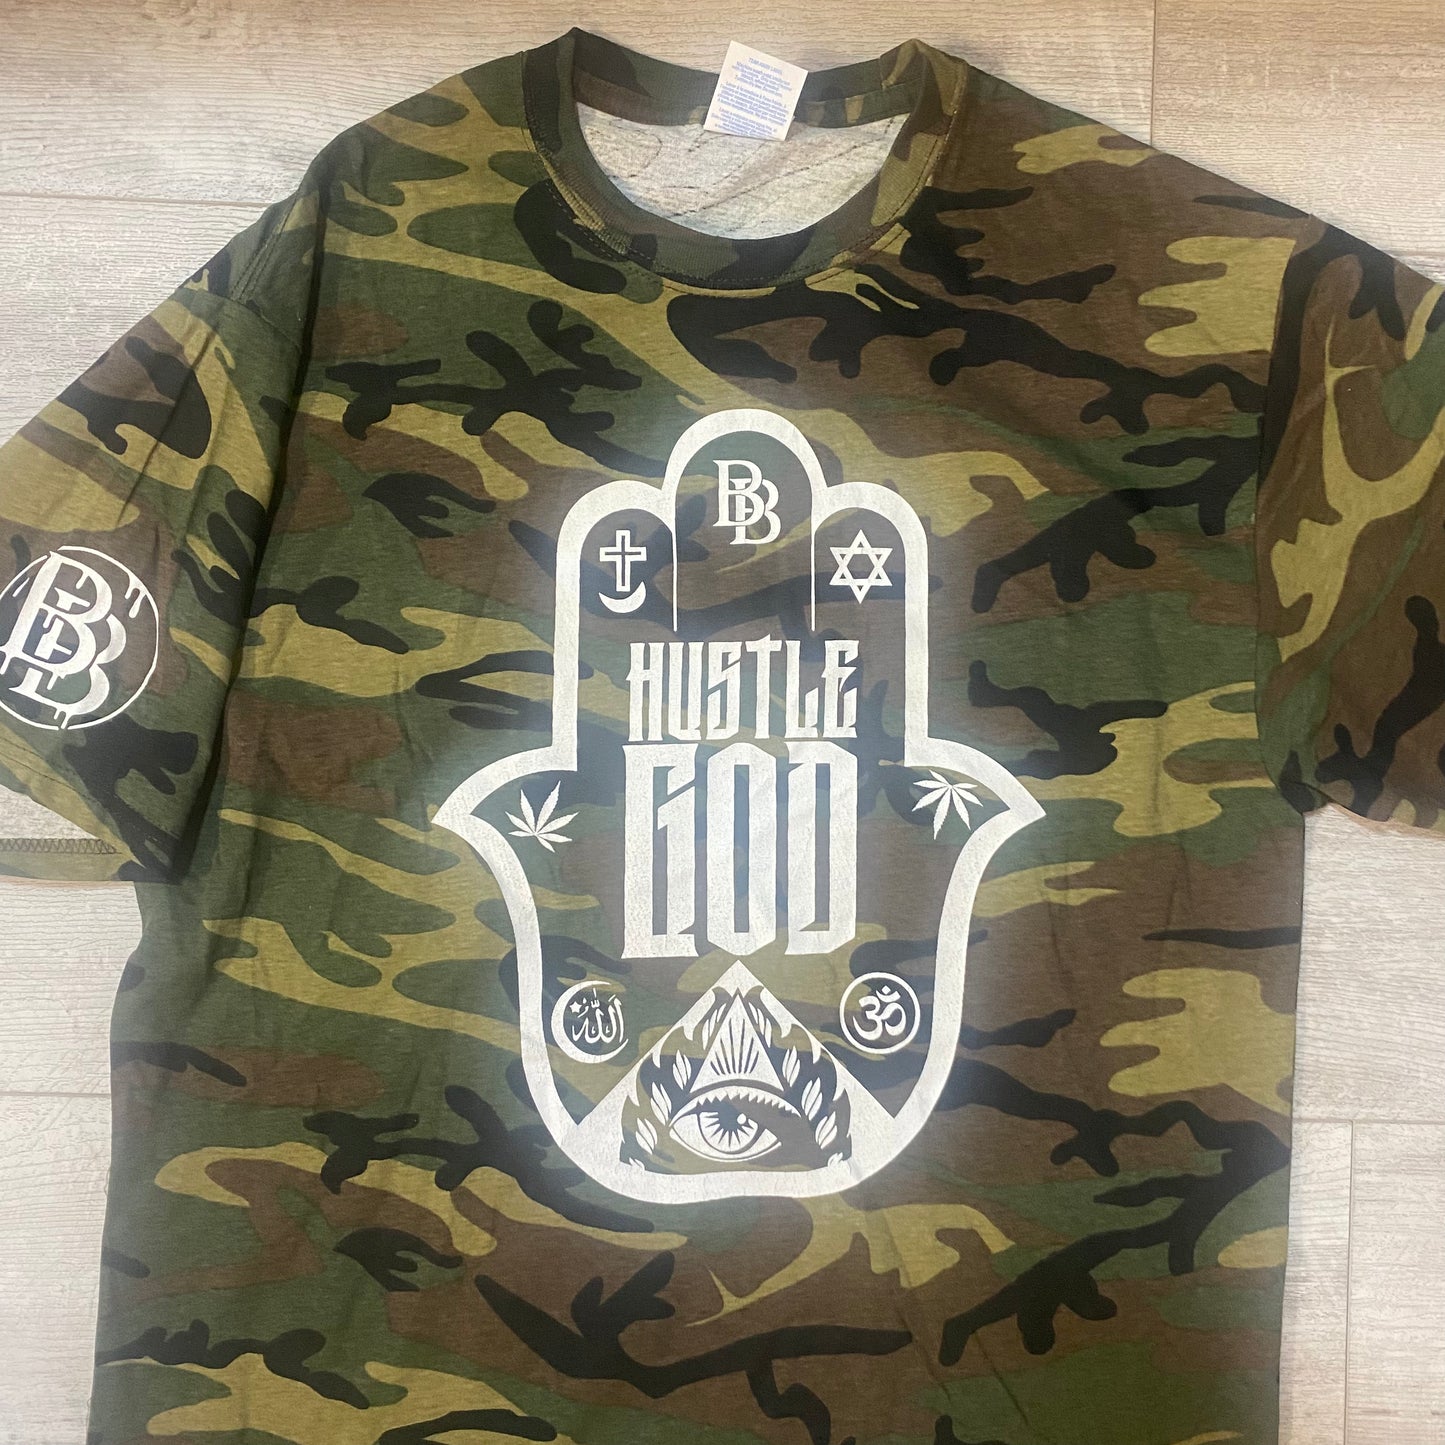 Hustle God Camouflage Camo T-Shirt